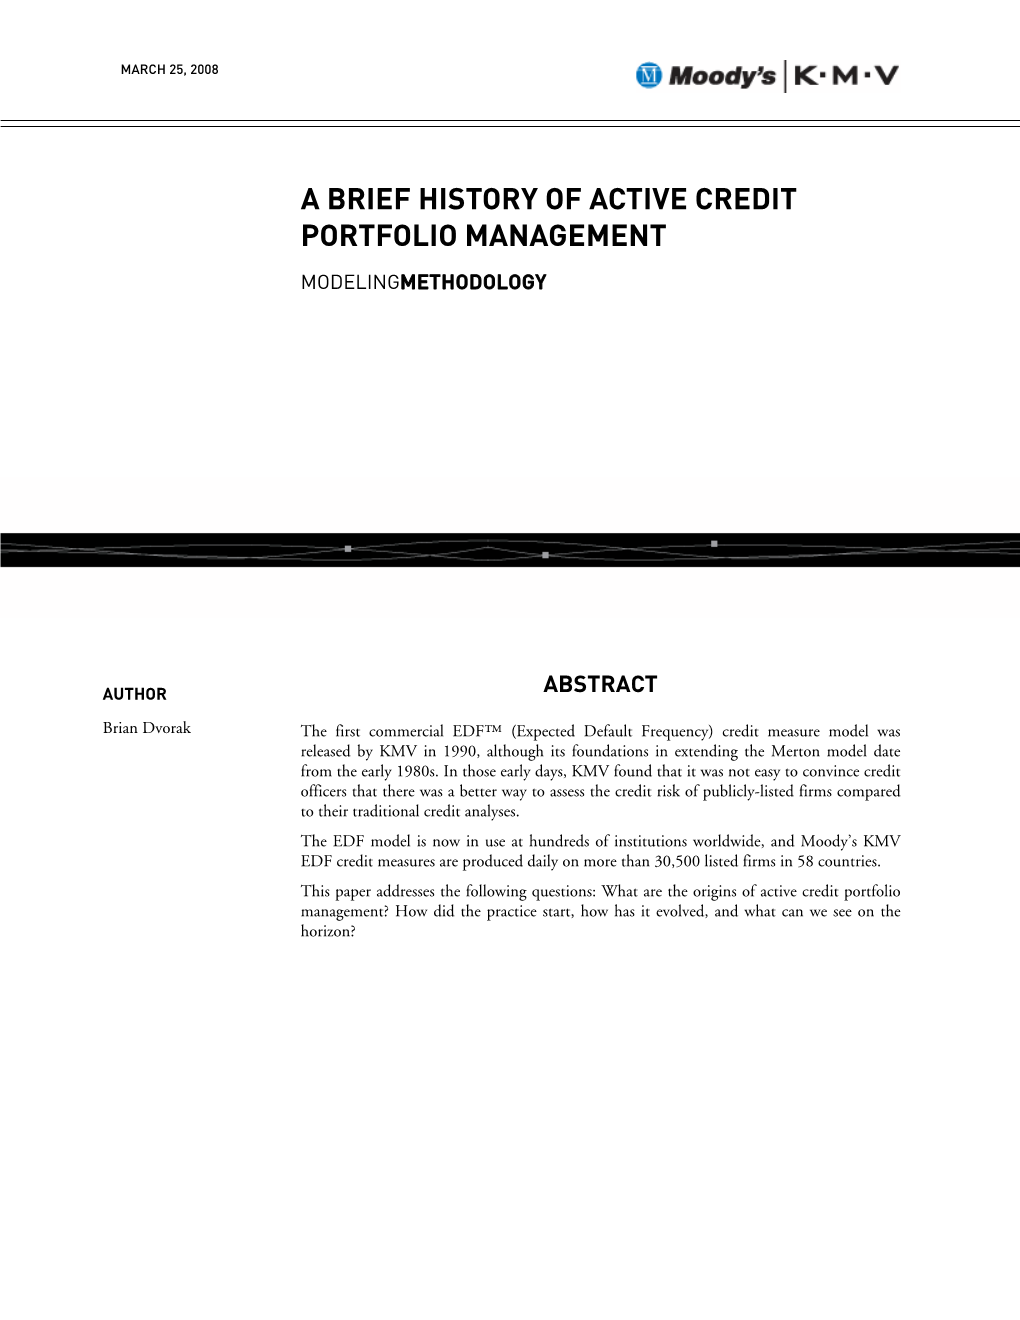 A Brief History of Active Credit Portfolio Management